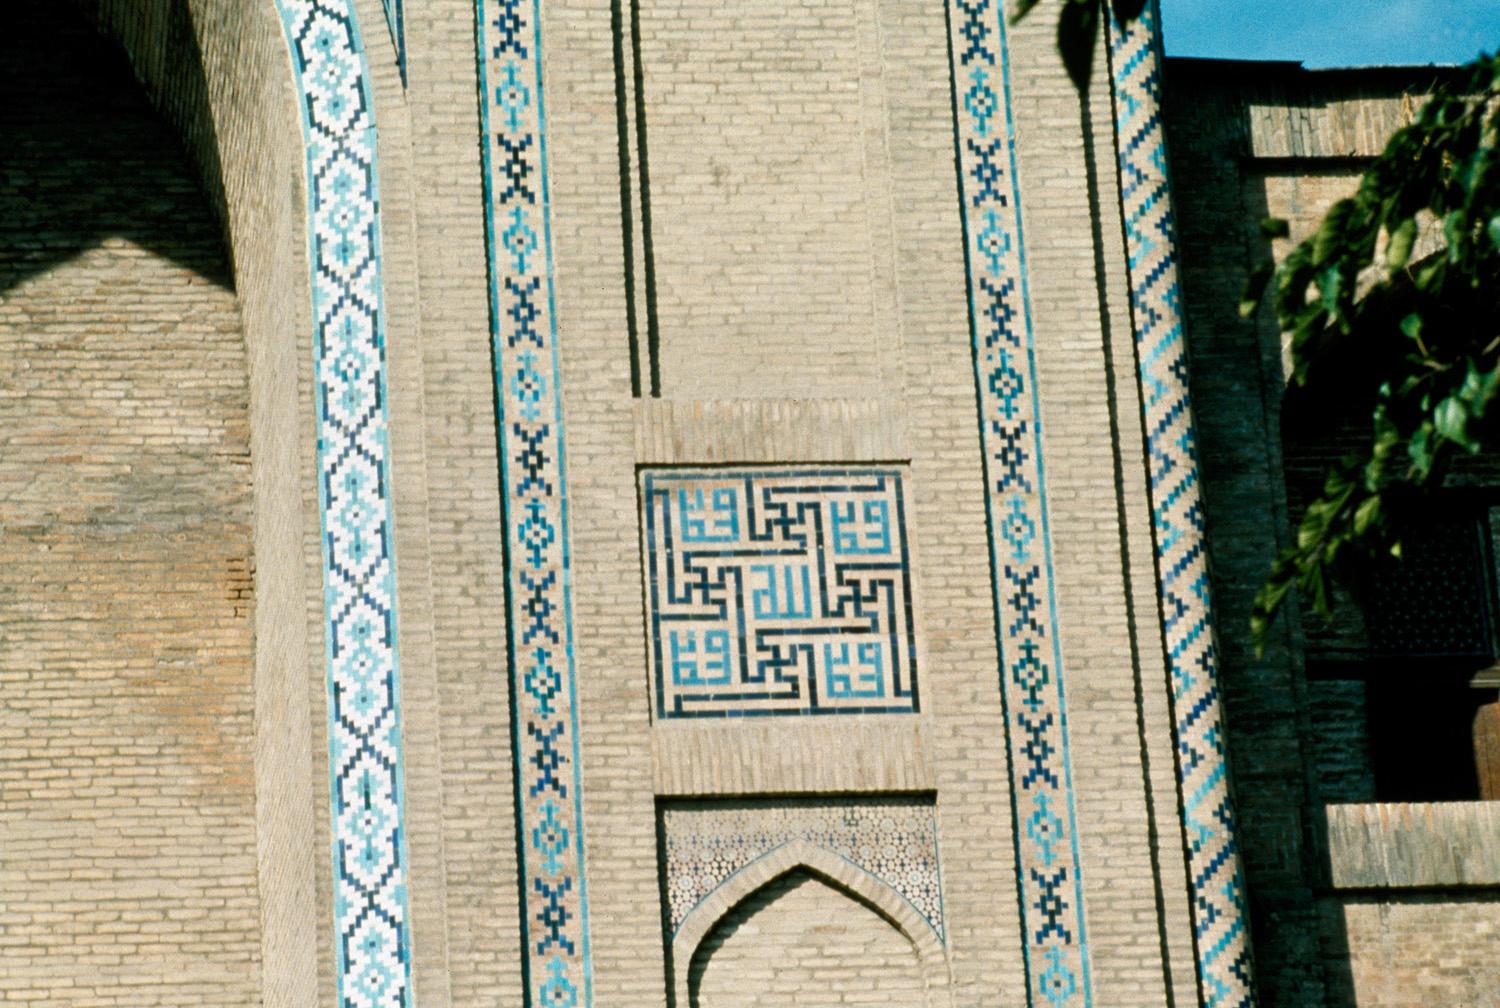 Exterior detail showing tile mosaic